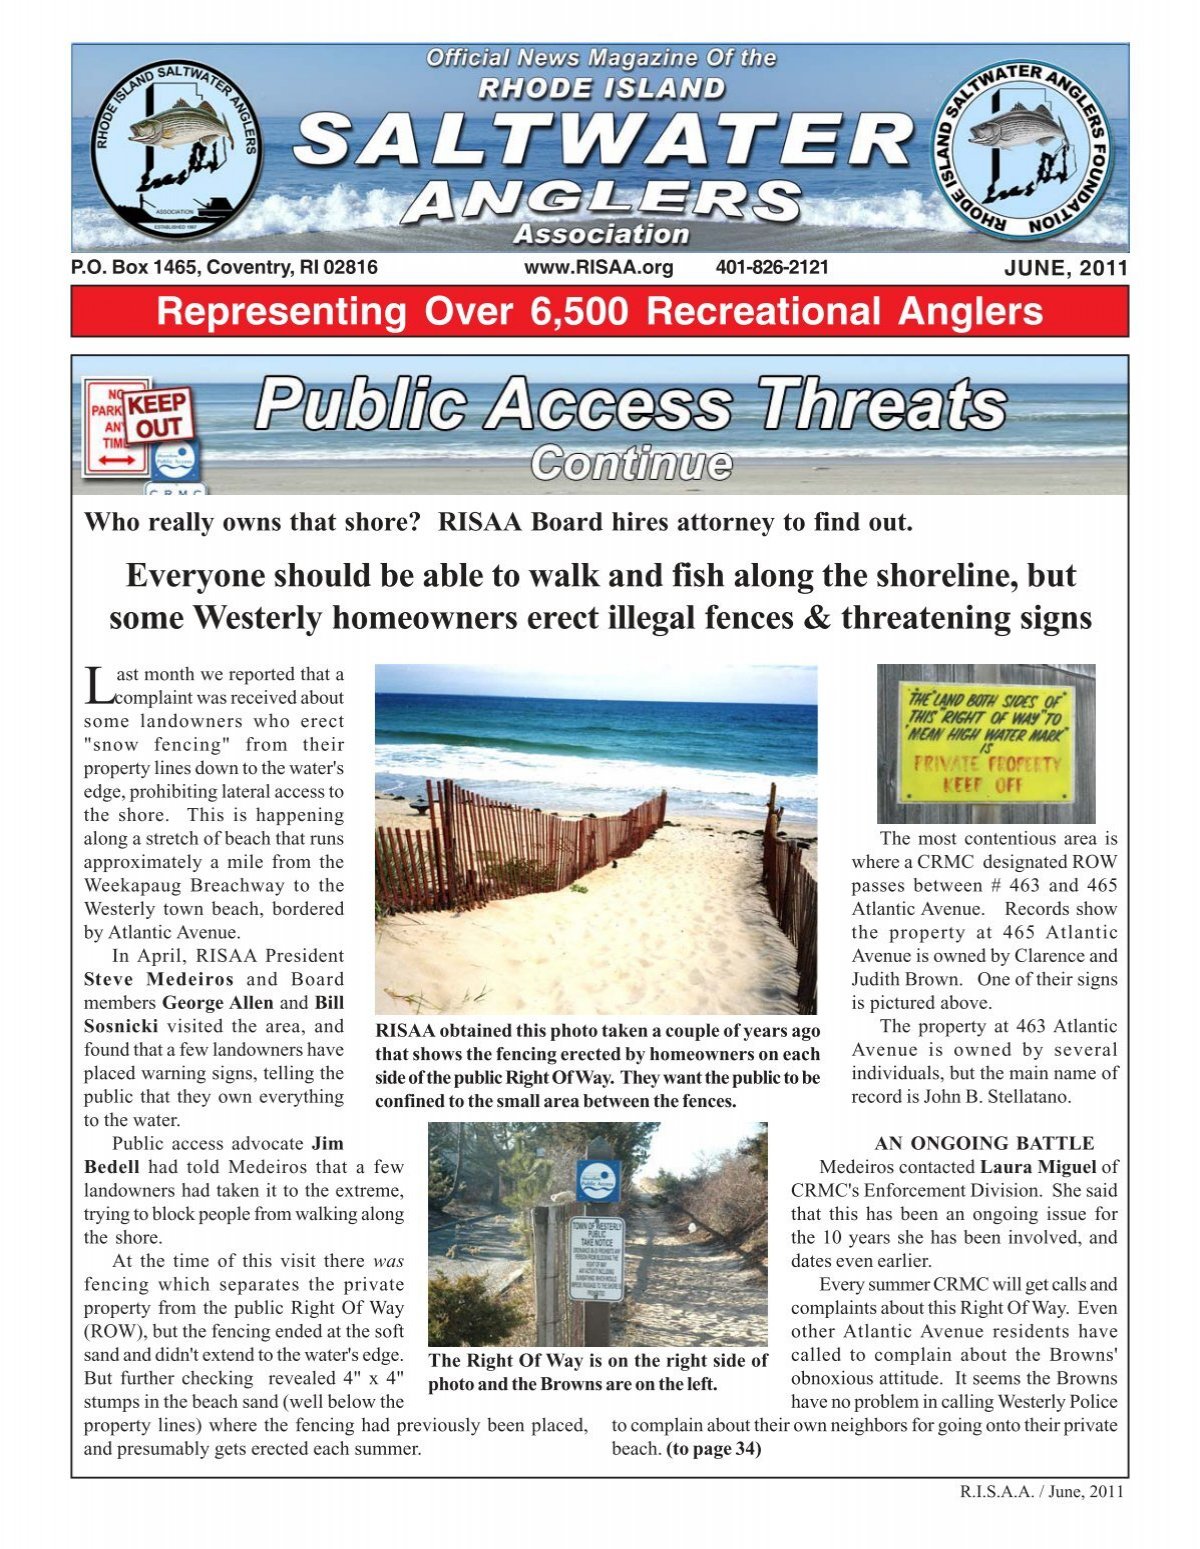 June, 2011 - The Rhode Island Saltwater Anglers Association